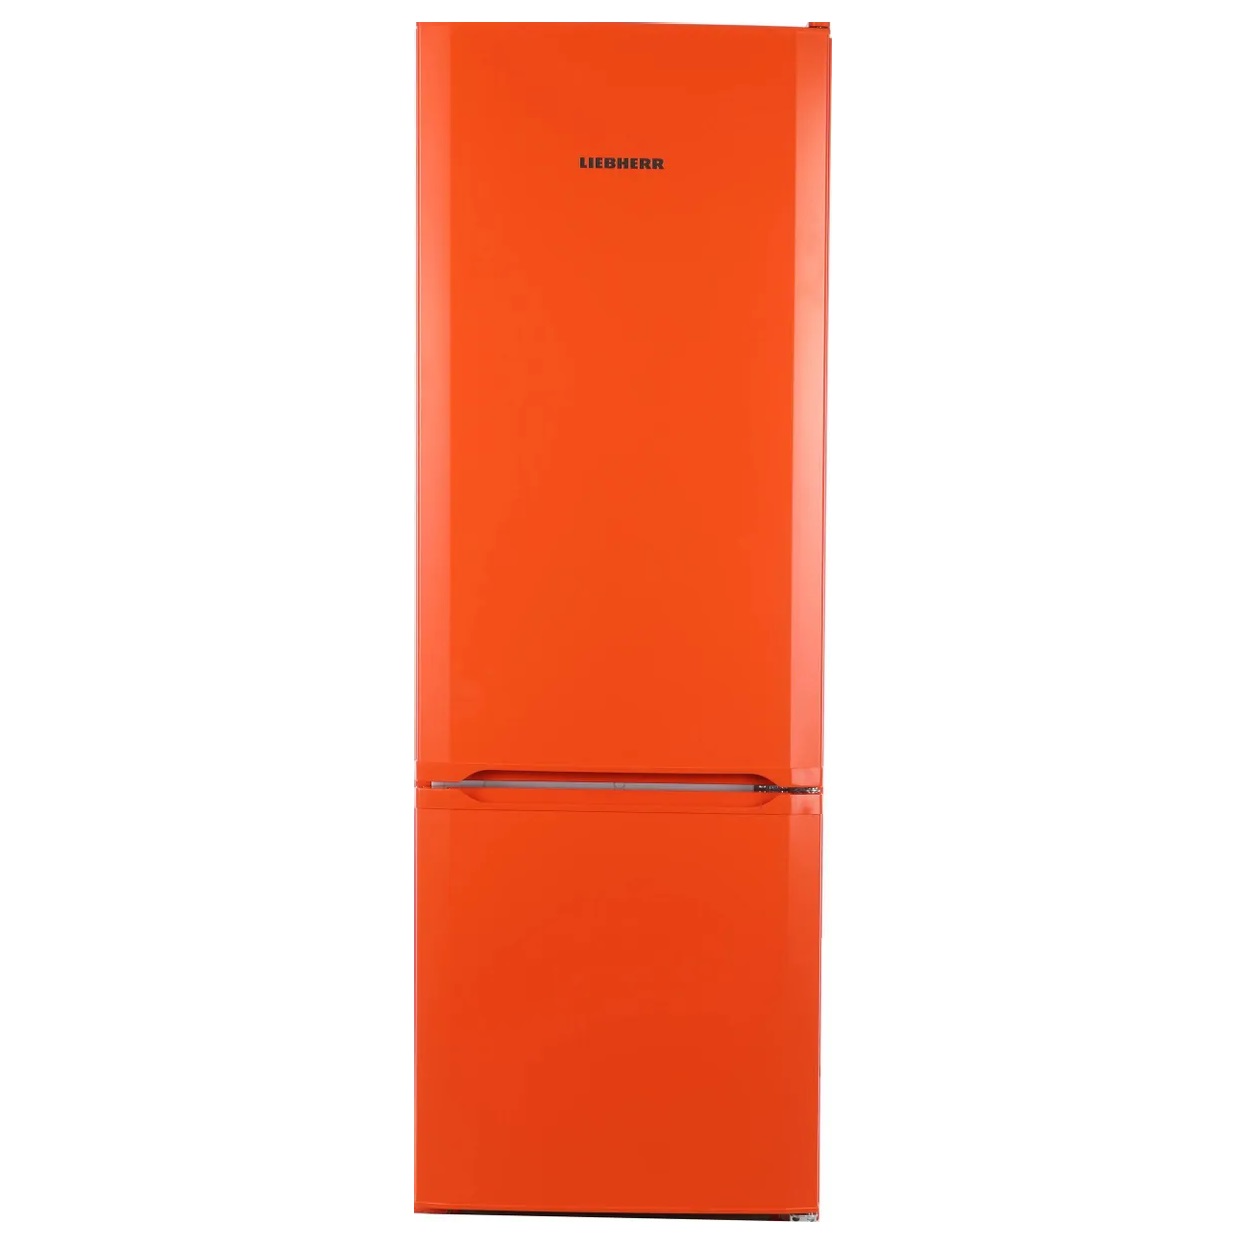 Холодильник LIEBHERR CUNO 2831-22 001 оранжевый холодильник liebherr cufb 2831 20 синий